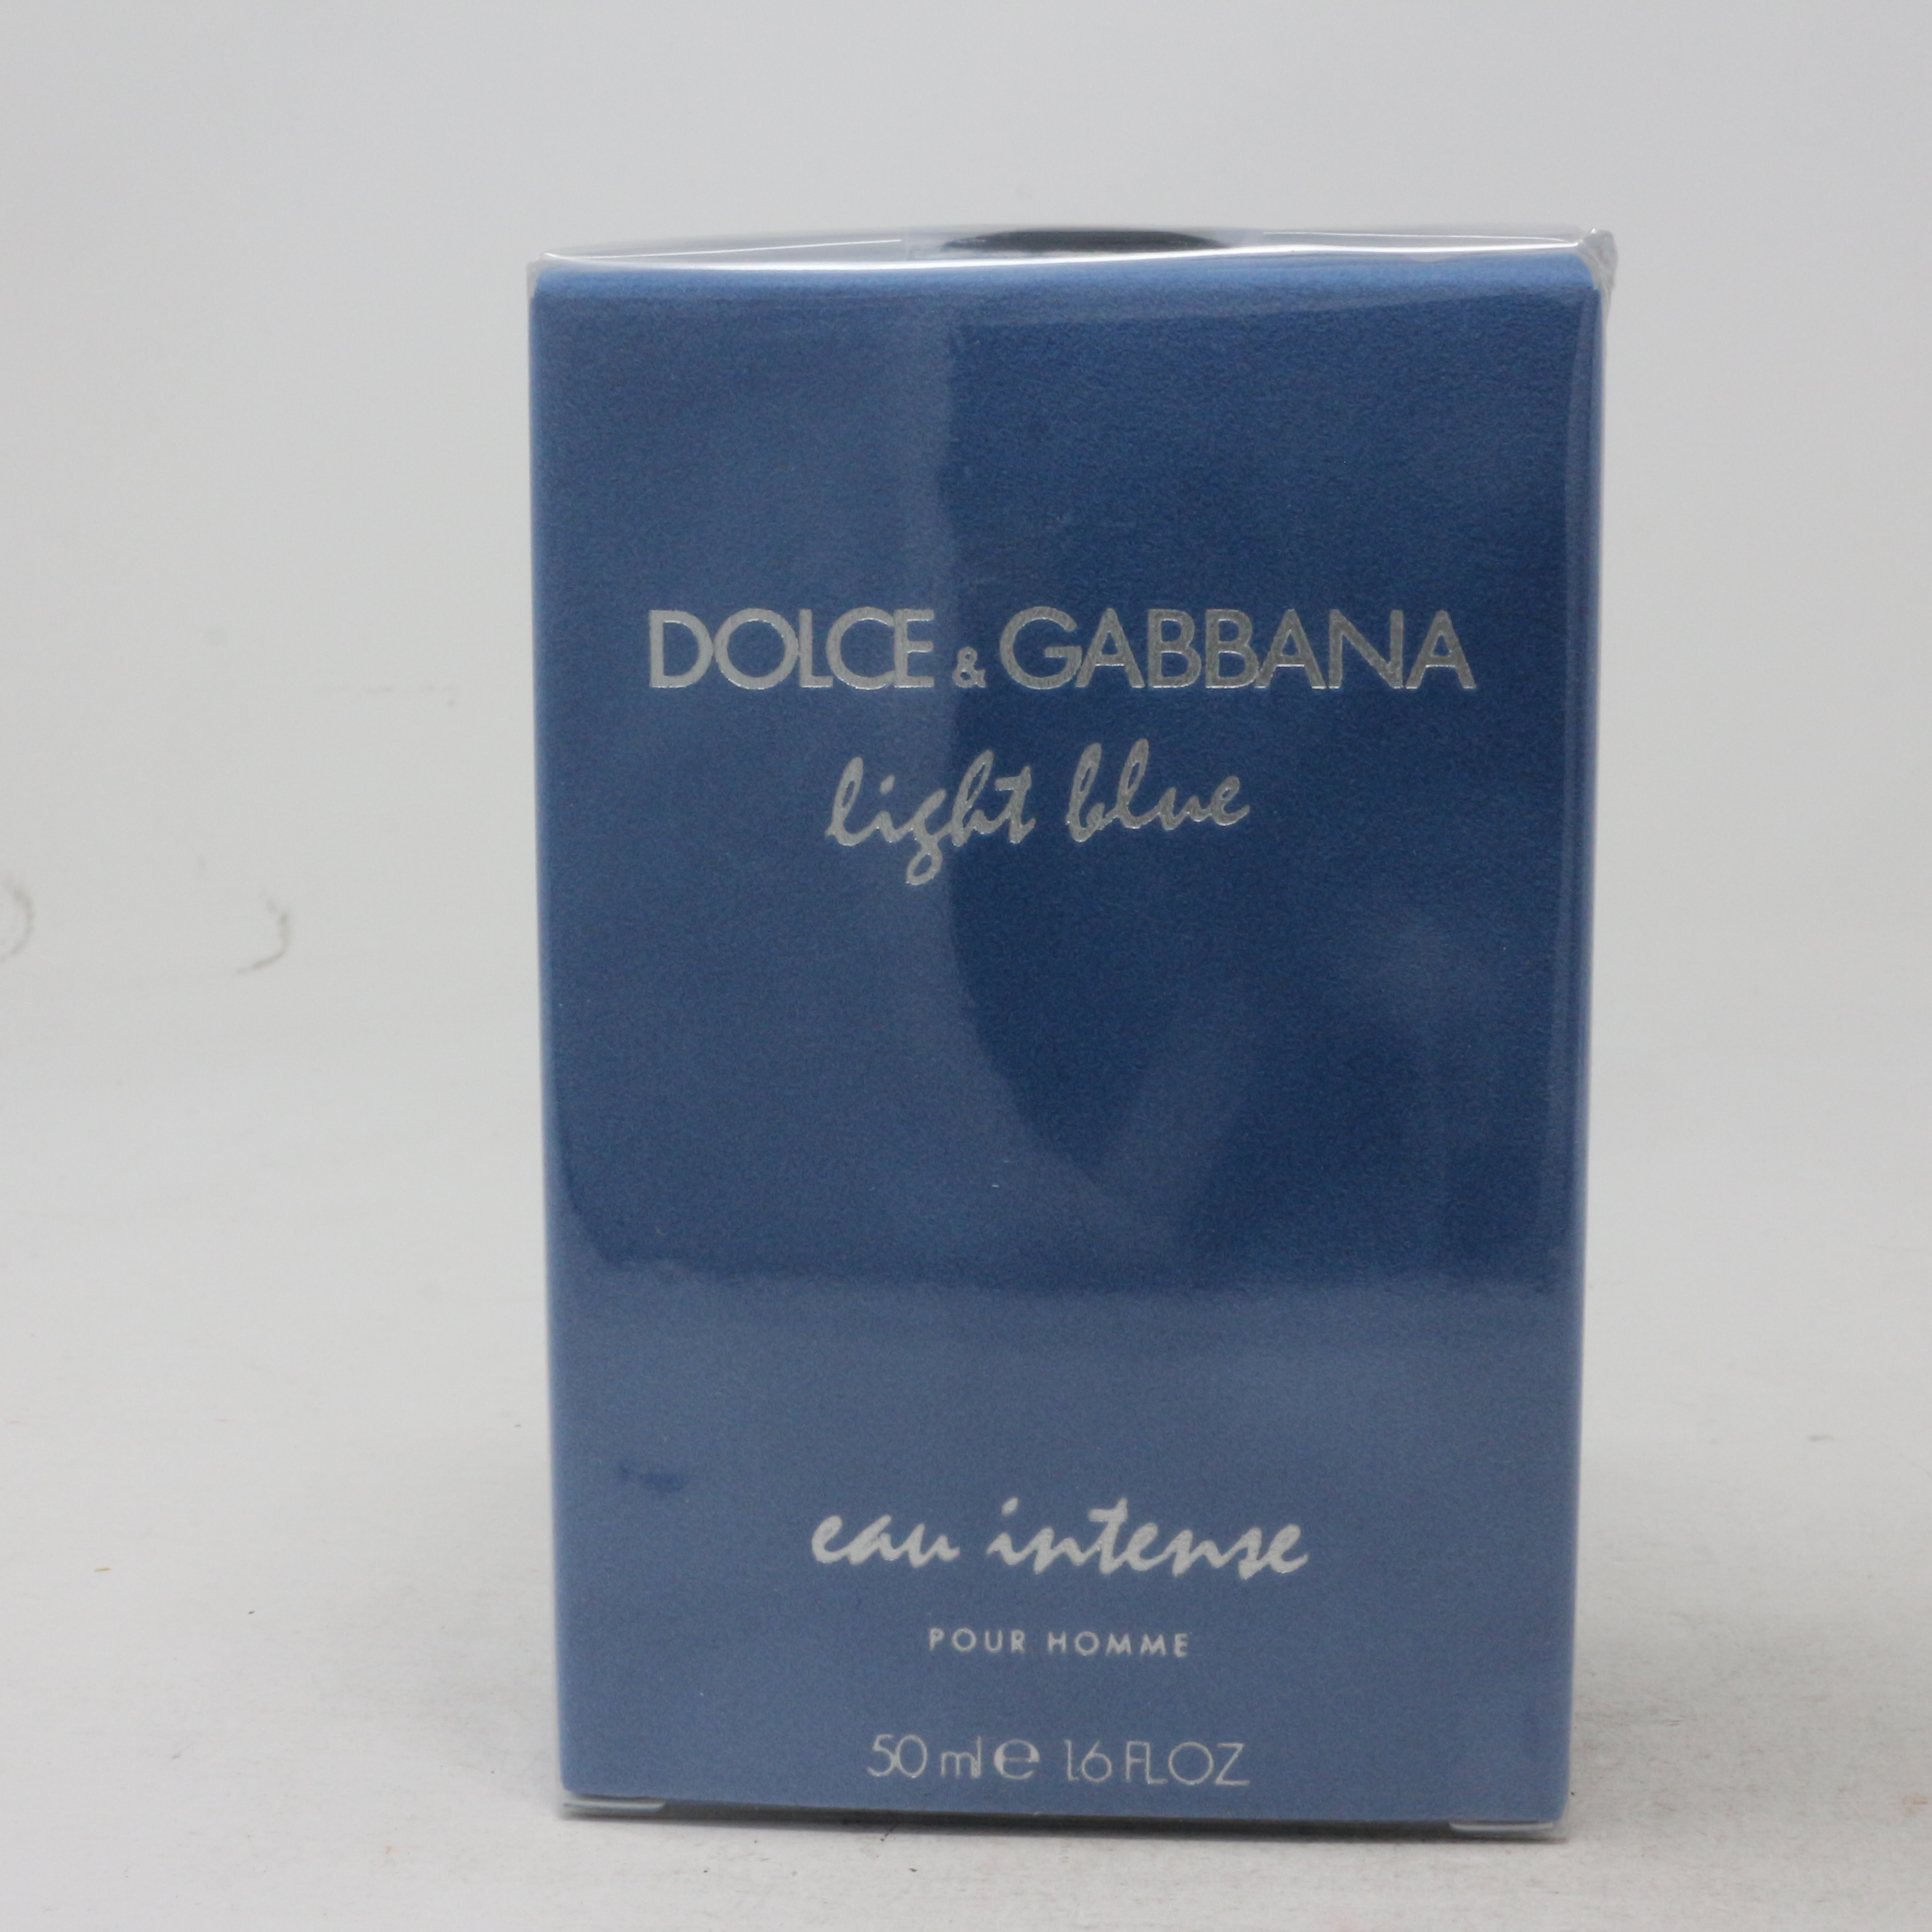 dolce & gabbana light blue 1.6 fl oz